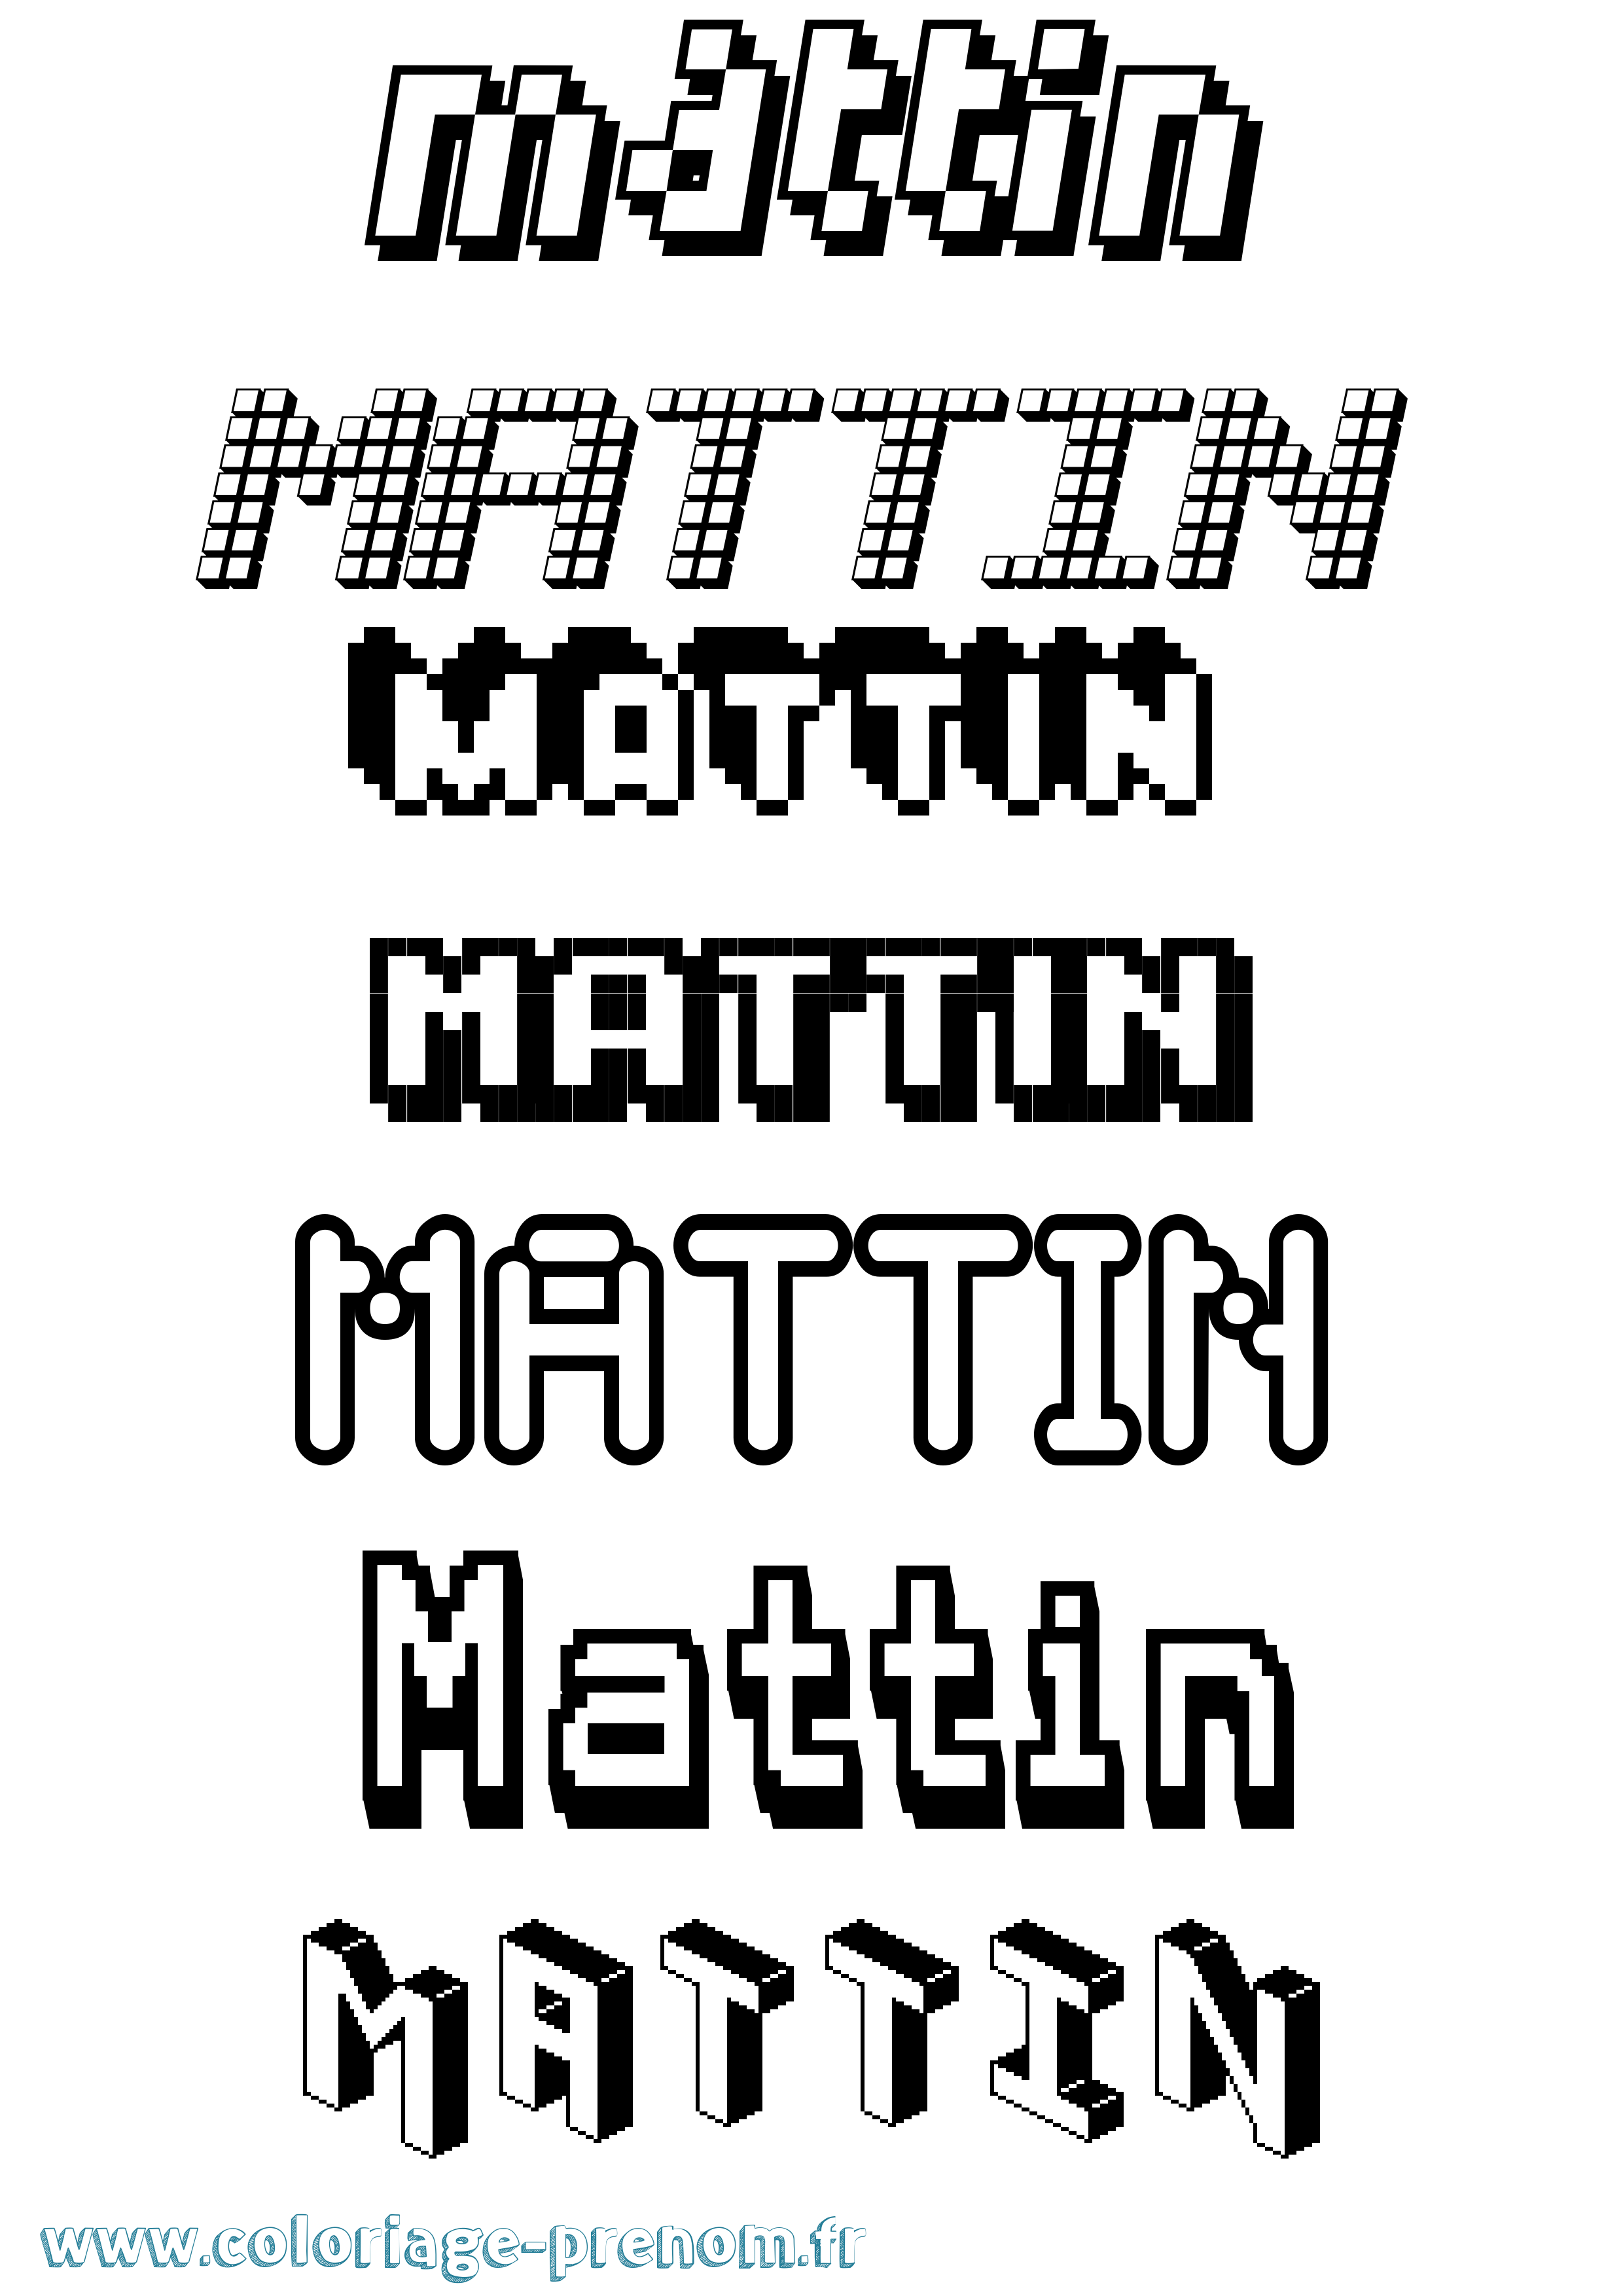 Coloriage prénom Mattin Pixel